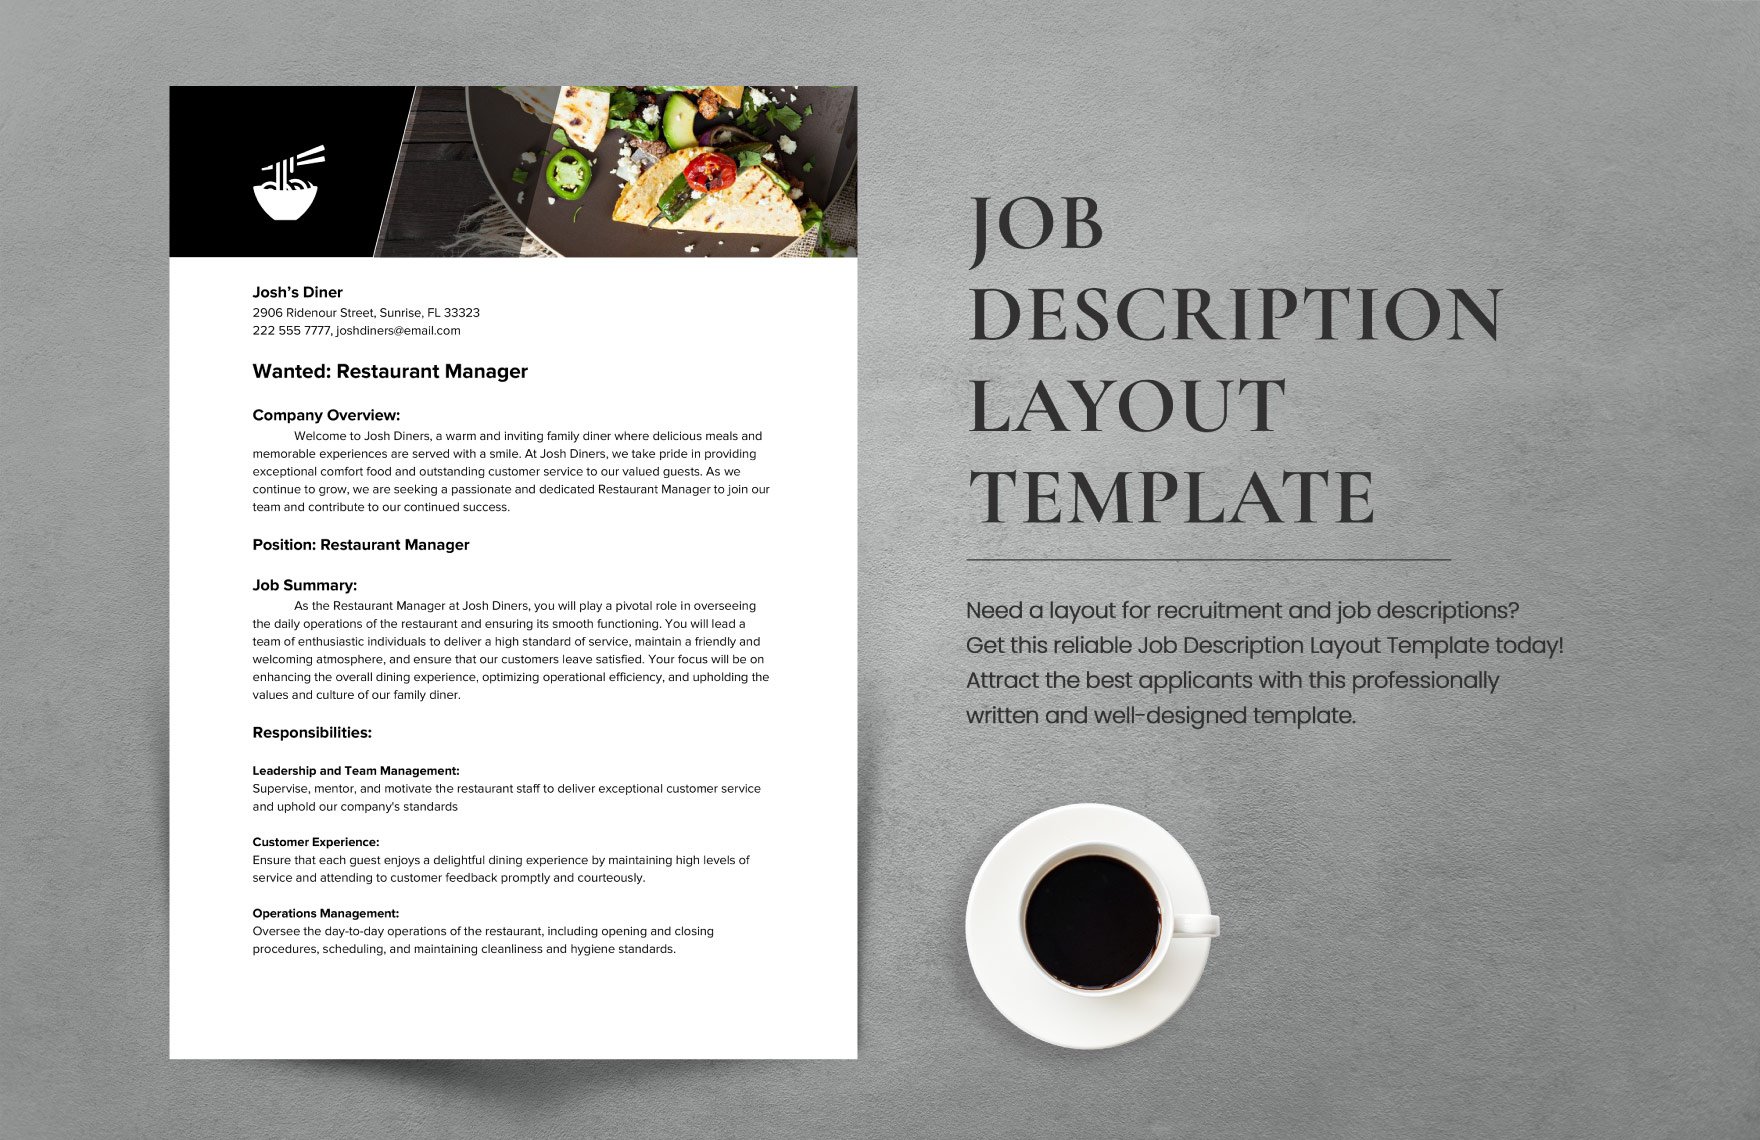 Free Job Description Layout Template in Word, Google Docs, PDF, Illustrator